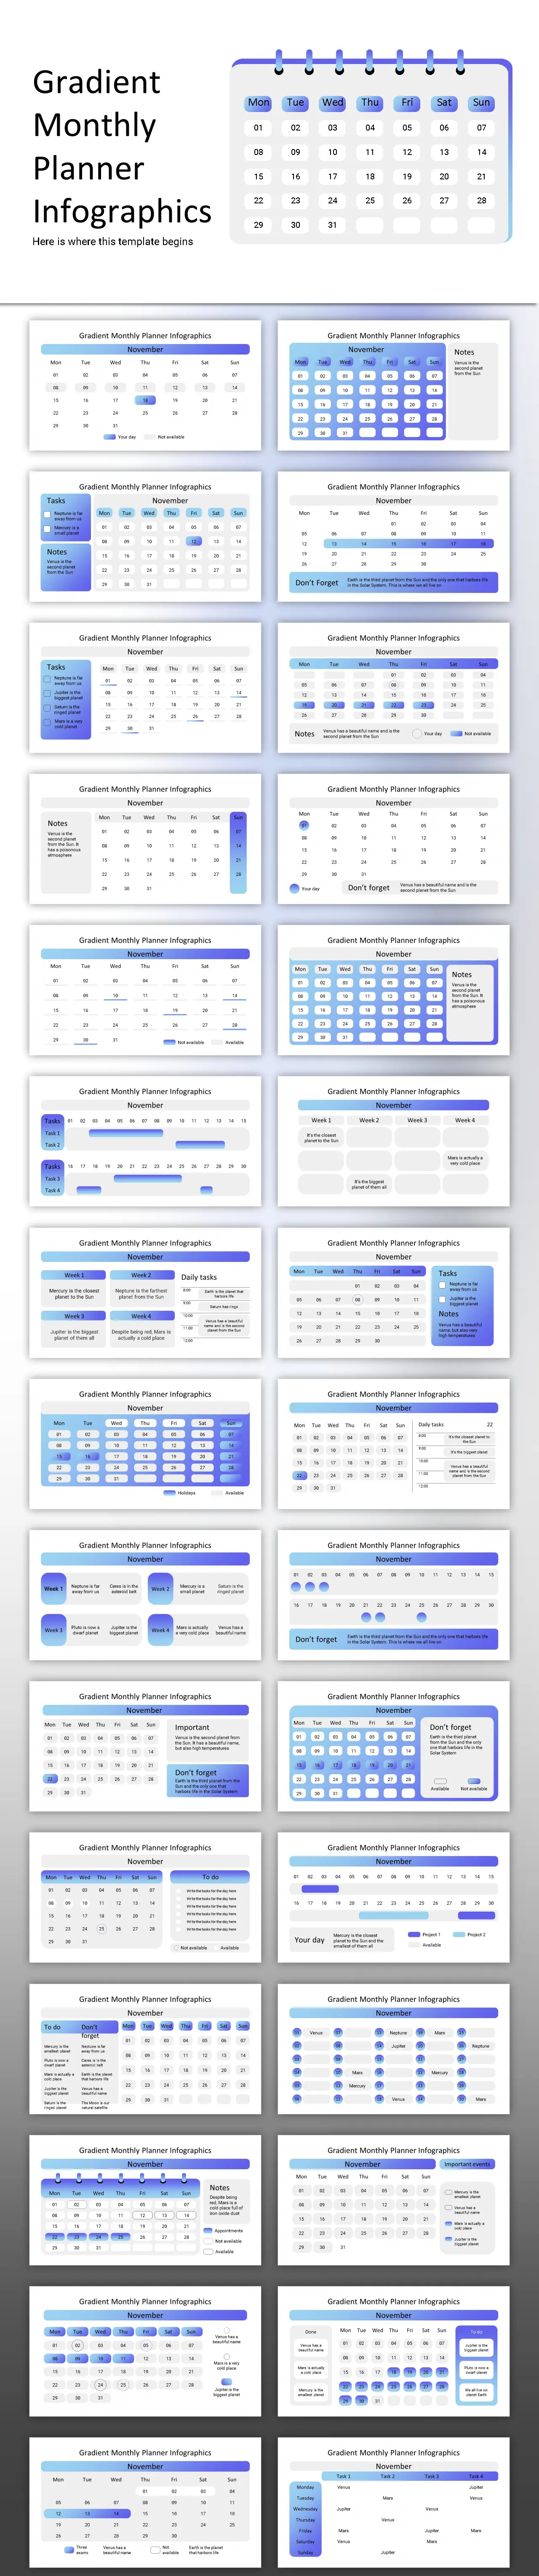 gradient monthly planner信息图形模板